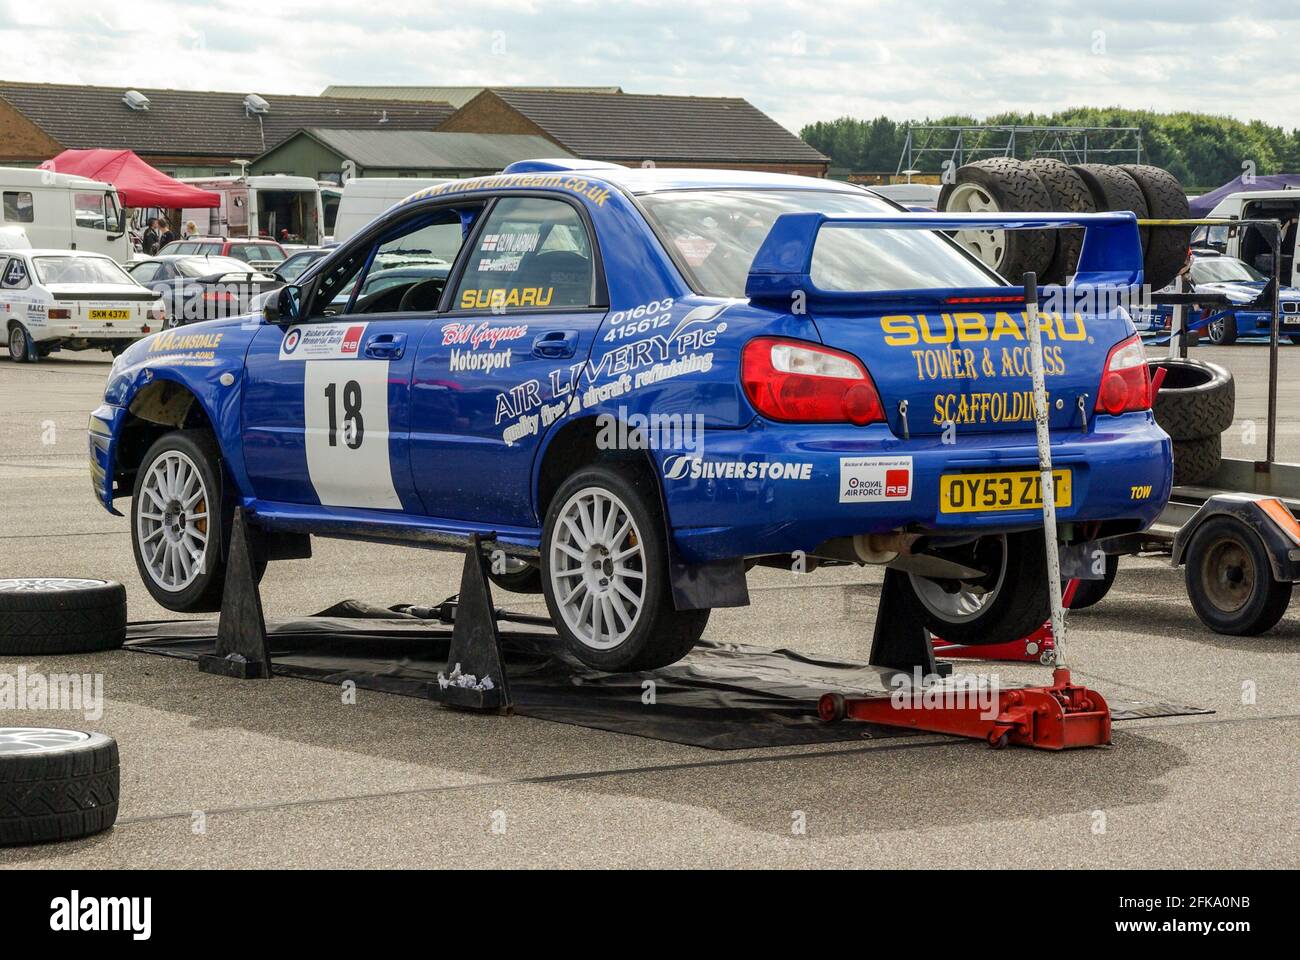 Subaru impreza sti rally car hi-res stock photography and images - Alamy